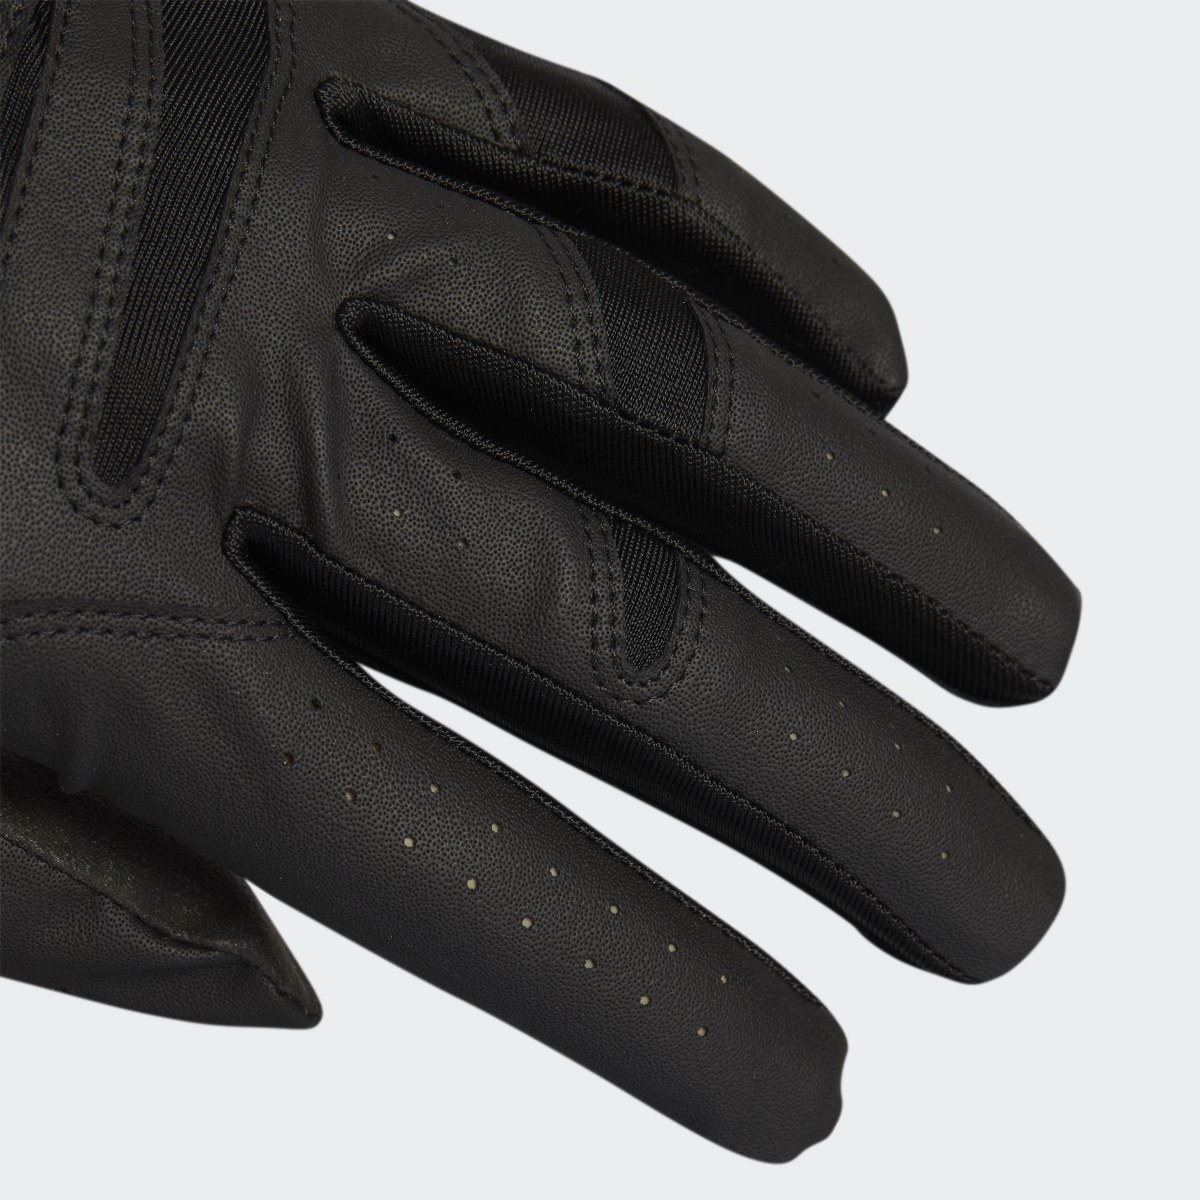 Adidas Aditech 22 Golf Glove Single. 5